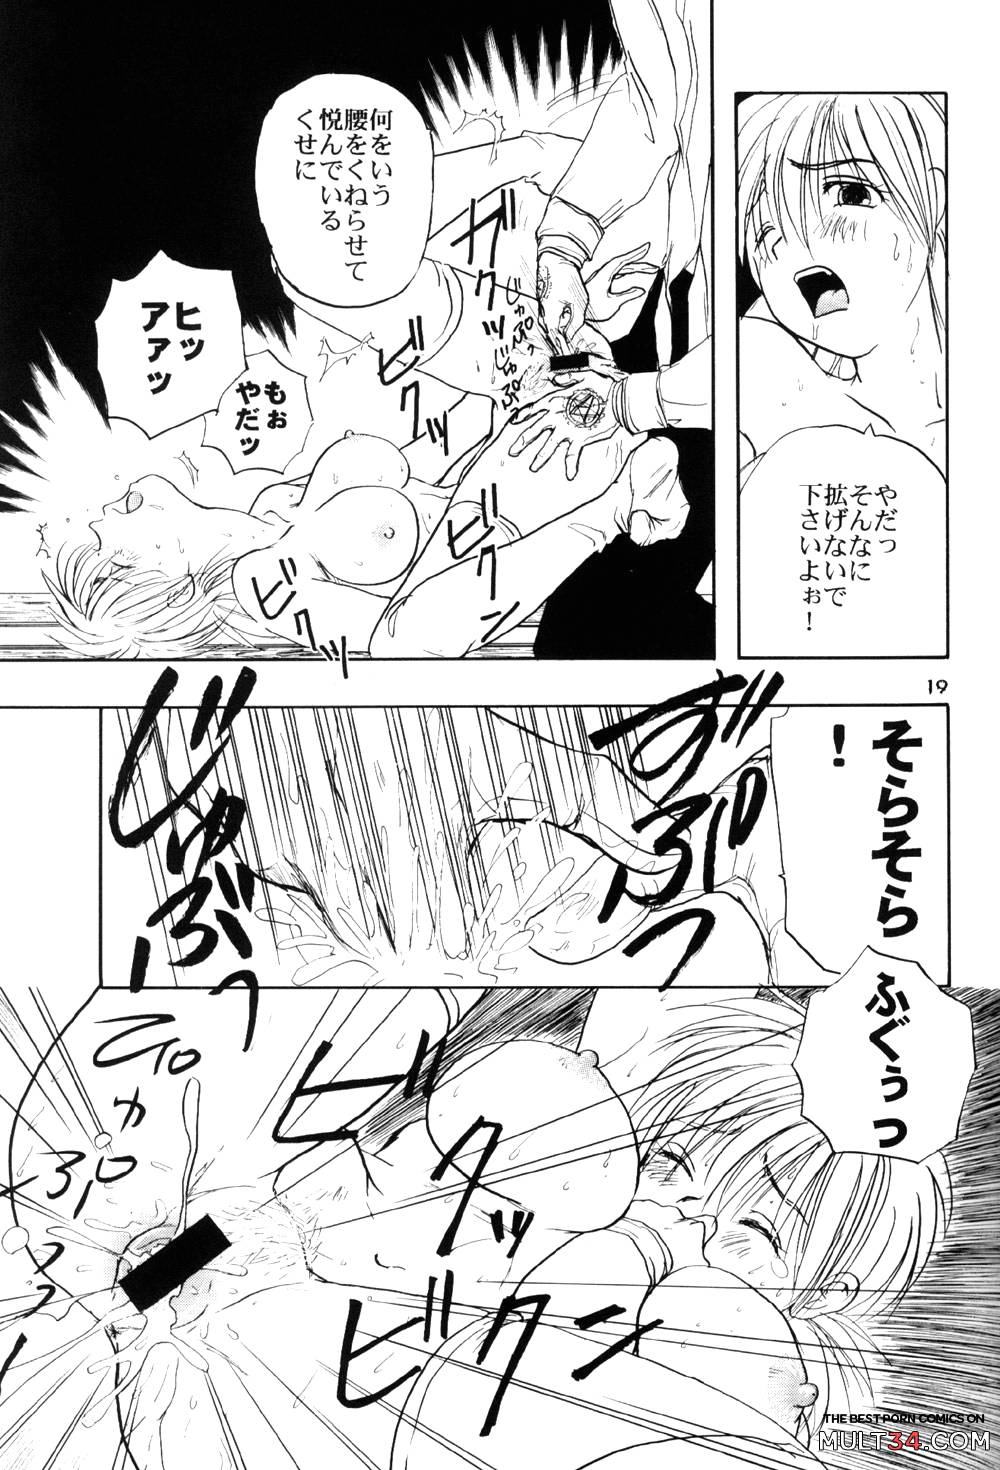 Hitsugi o Tataku Onna page 19